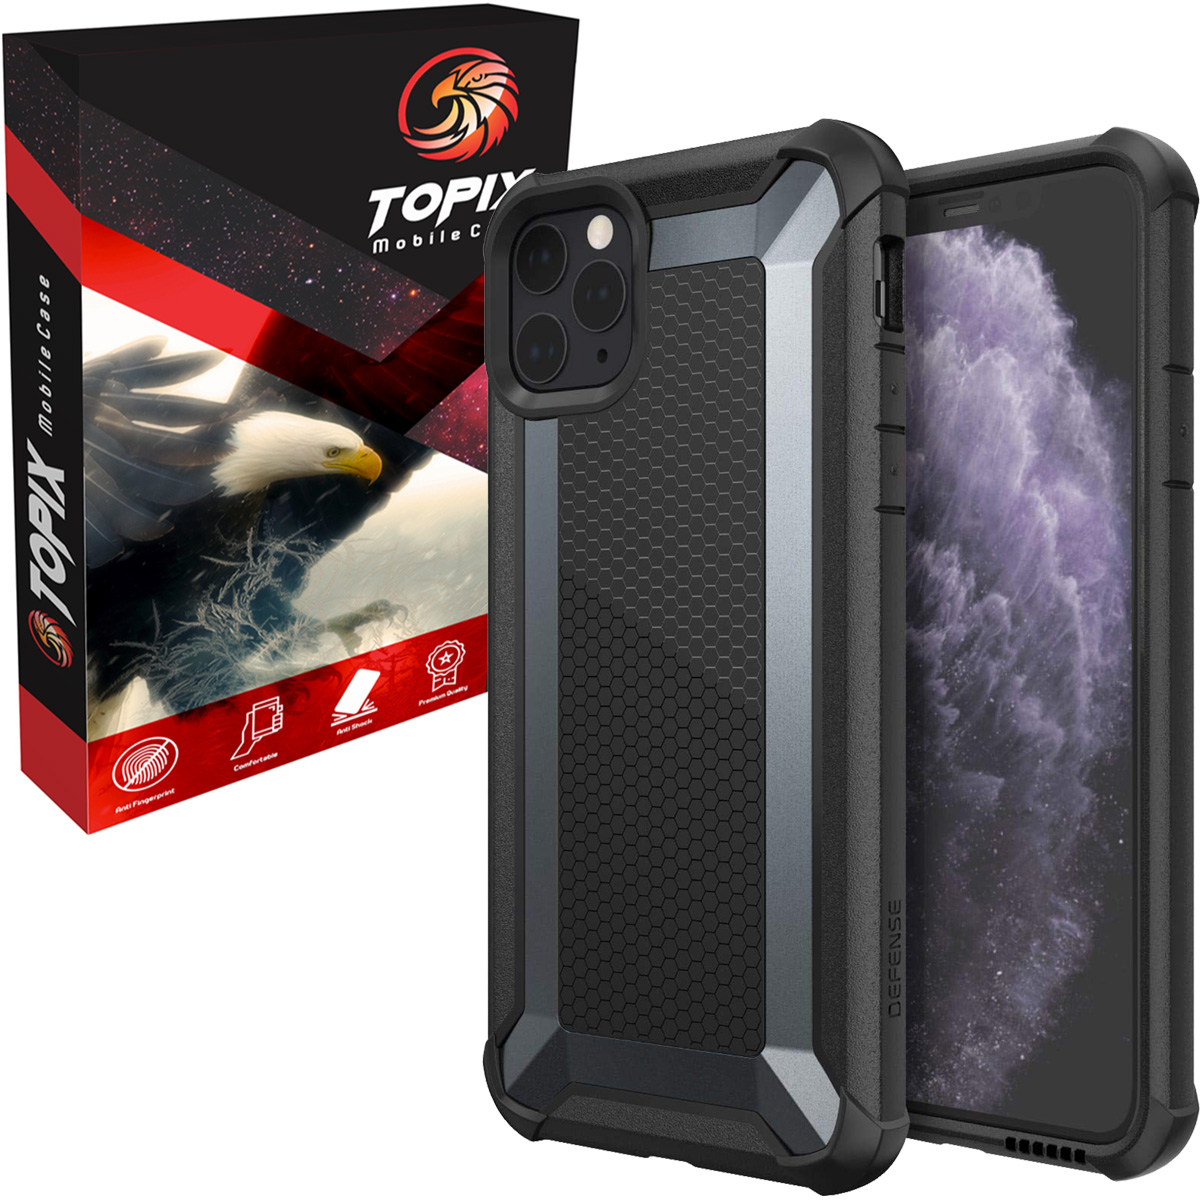 کاور تاپیکس مدل Tactical-2020 مناسب برای گوشی موبایل اپل iPhone 11 Pro